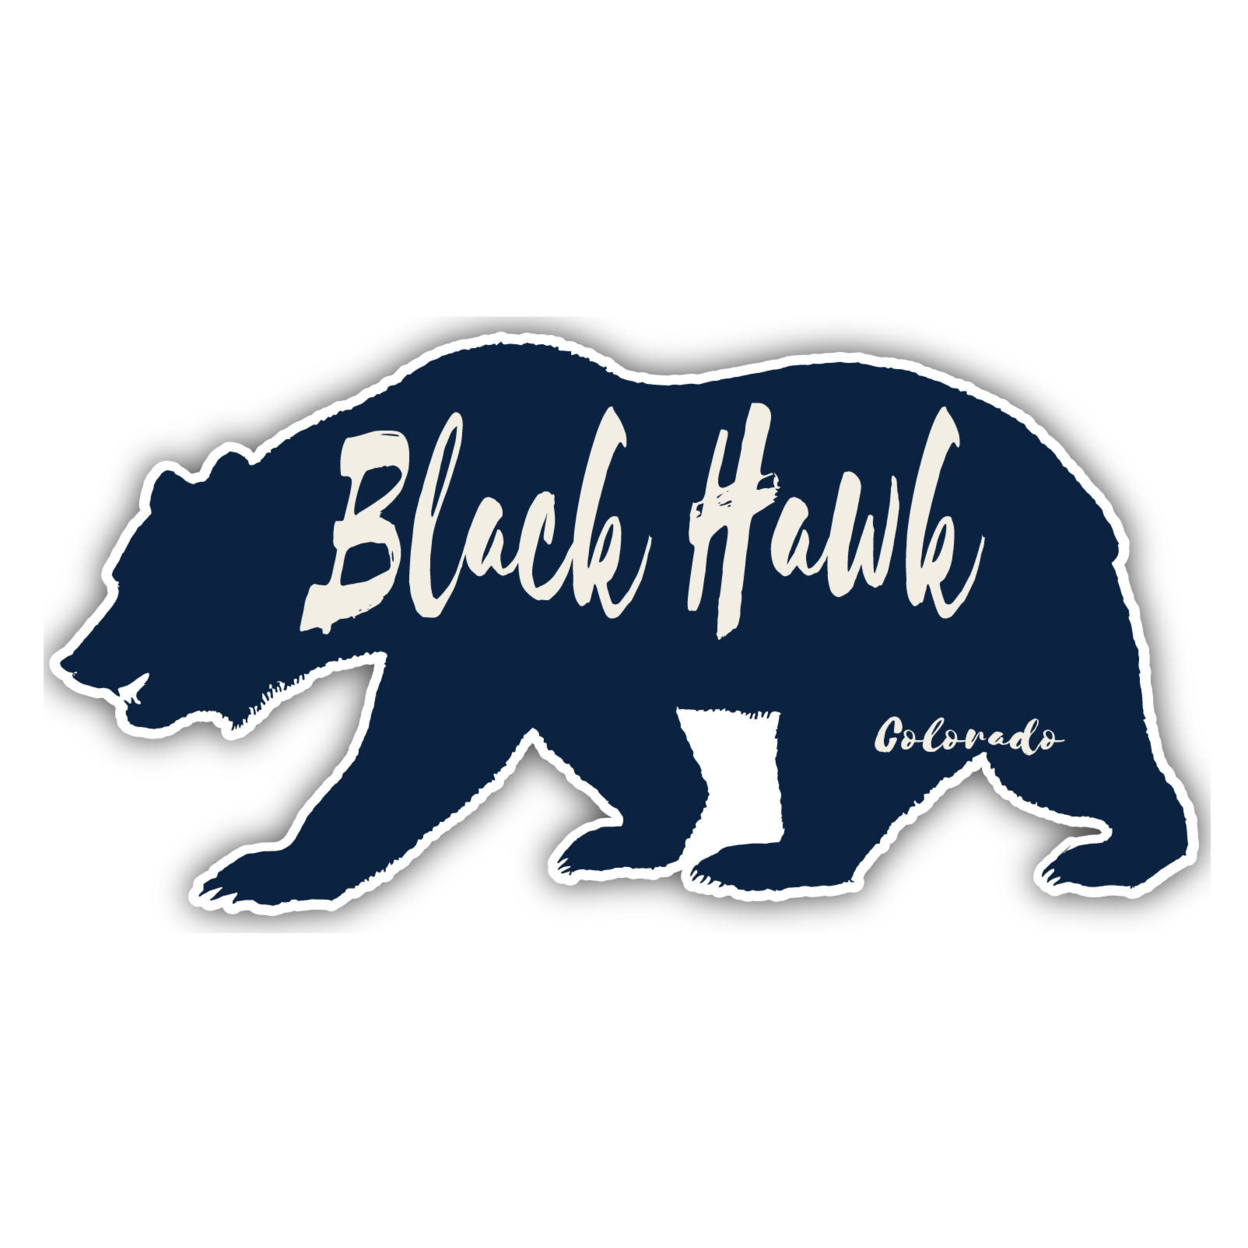 Black Hawk Colorado Souvenir Decorative Stickers (Choose Theme And Size) - 4-Pack, 2-Inch, Tent